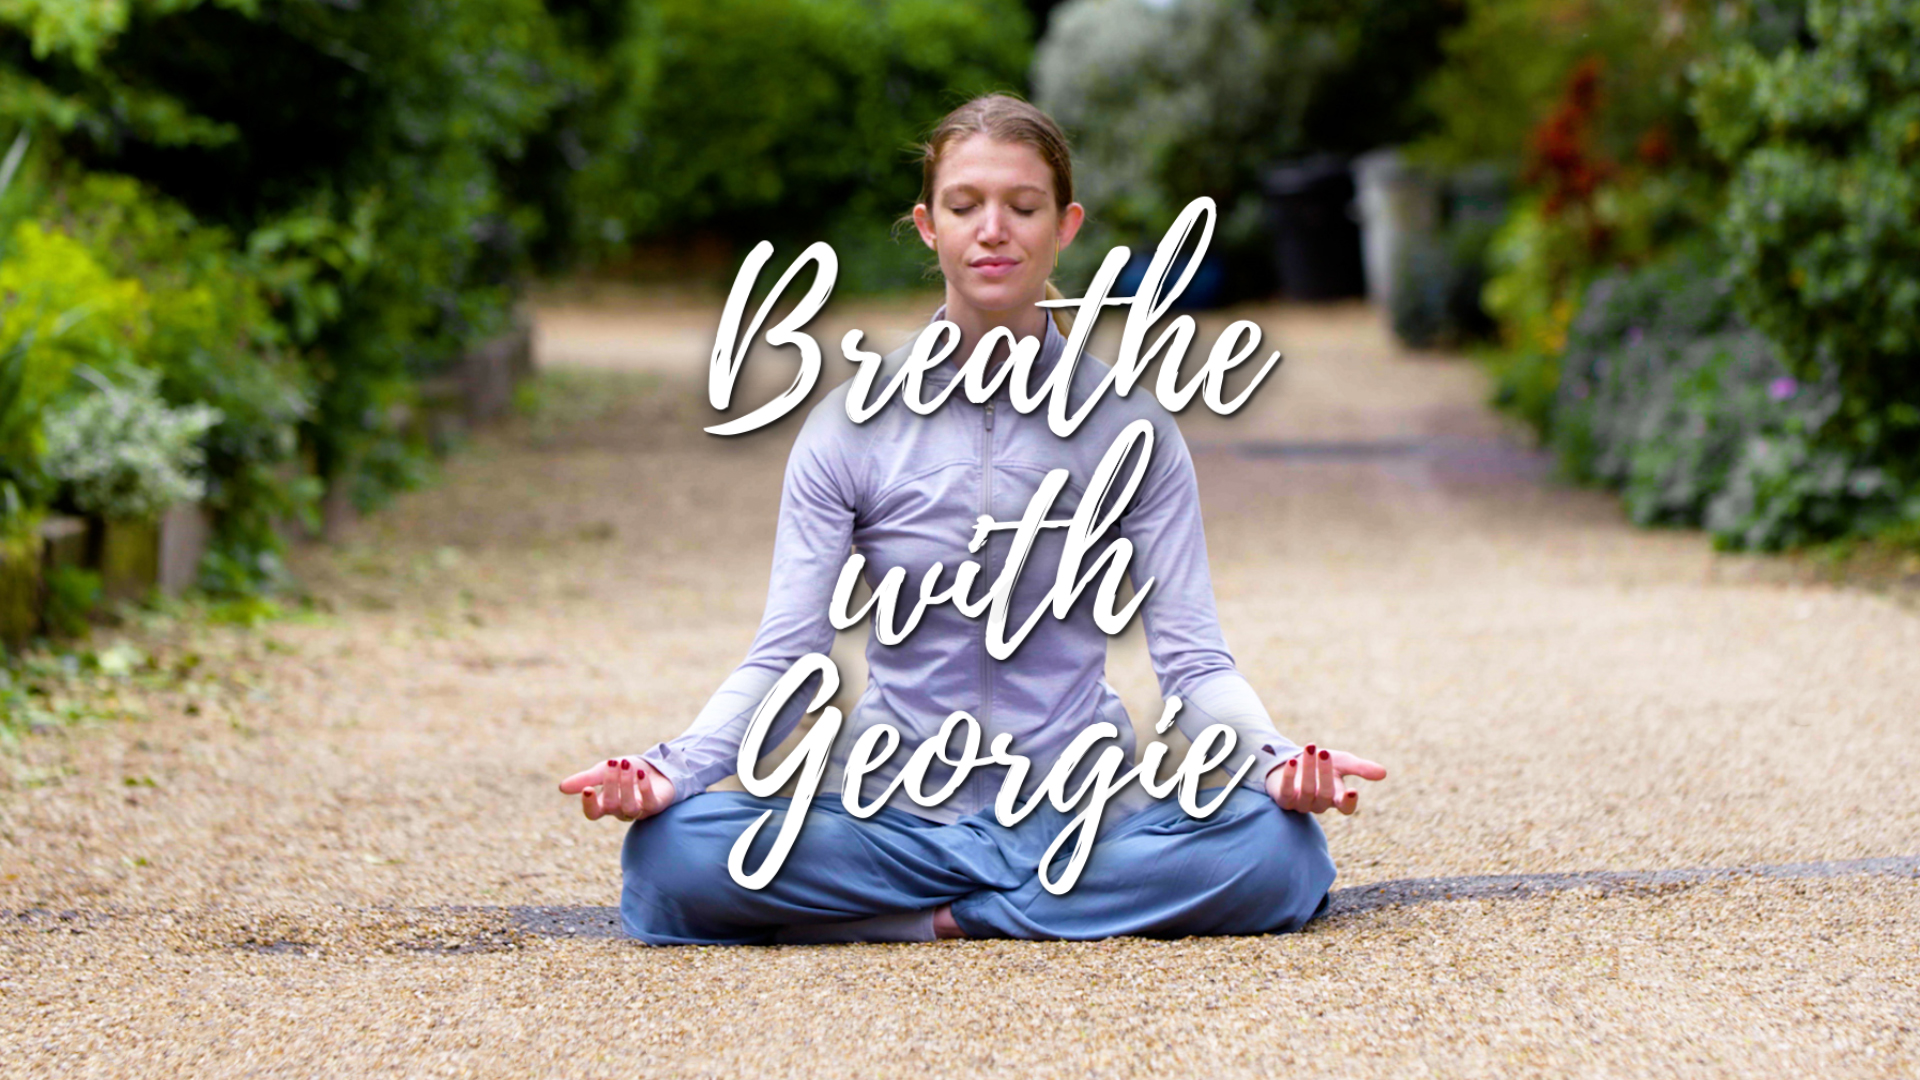 BREATHE WITH GEORGIE